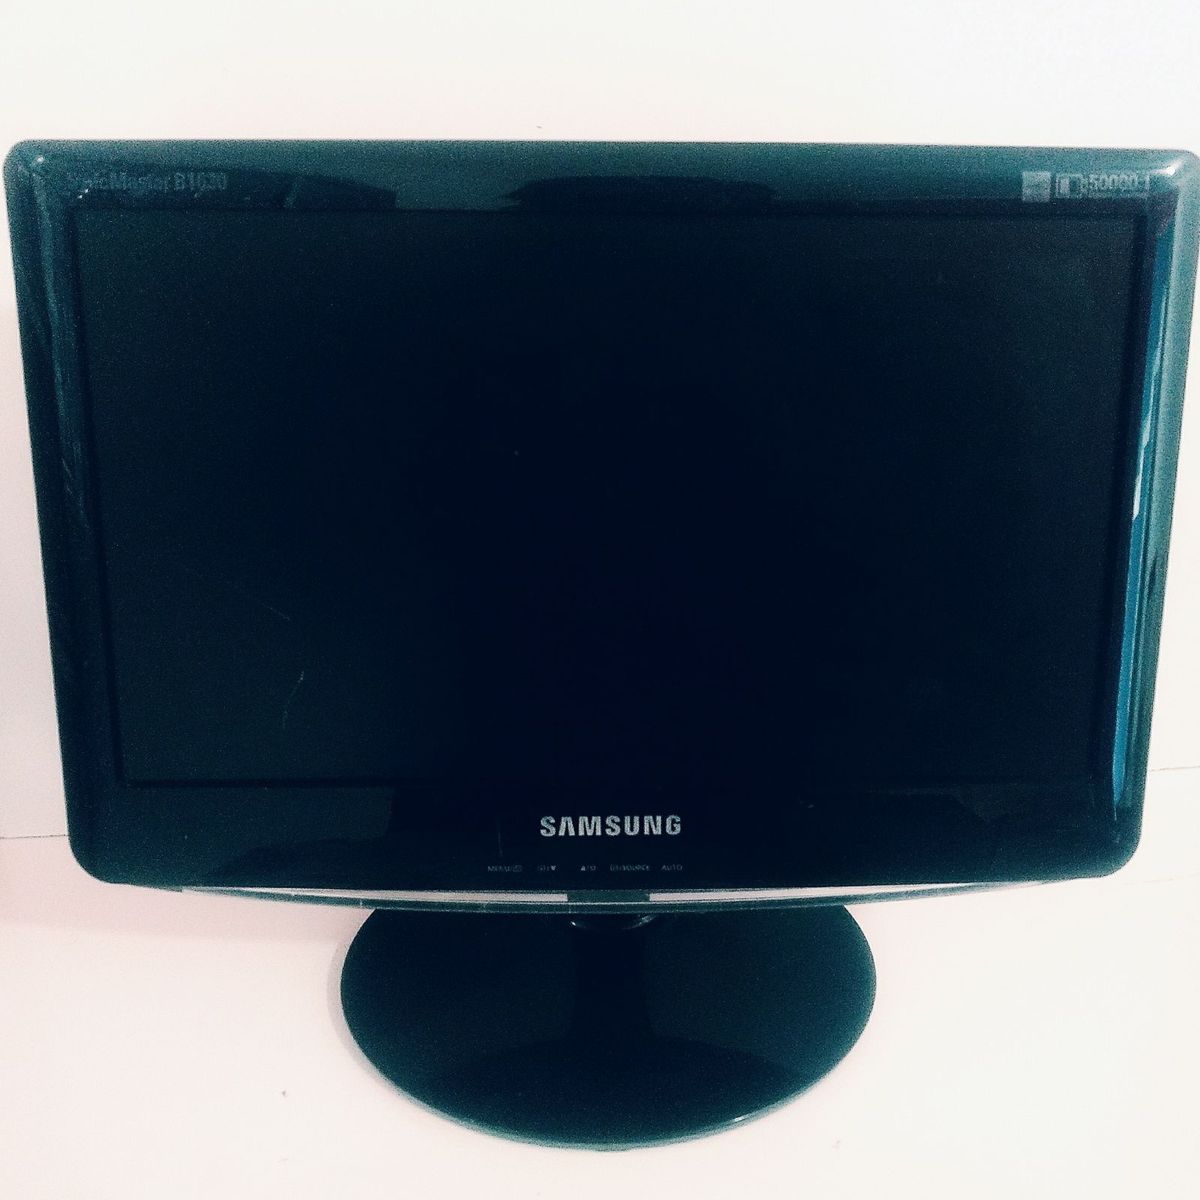 Privilegiado alguna cosa portugués Monitor Samsung 14 Polegadas | Computador Desktop Samsung Usado 22472120 |  enjoei